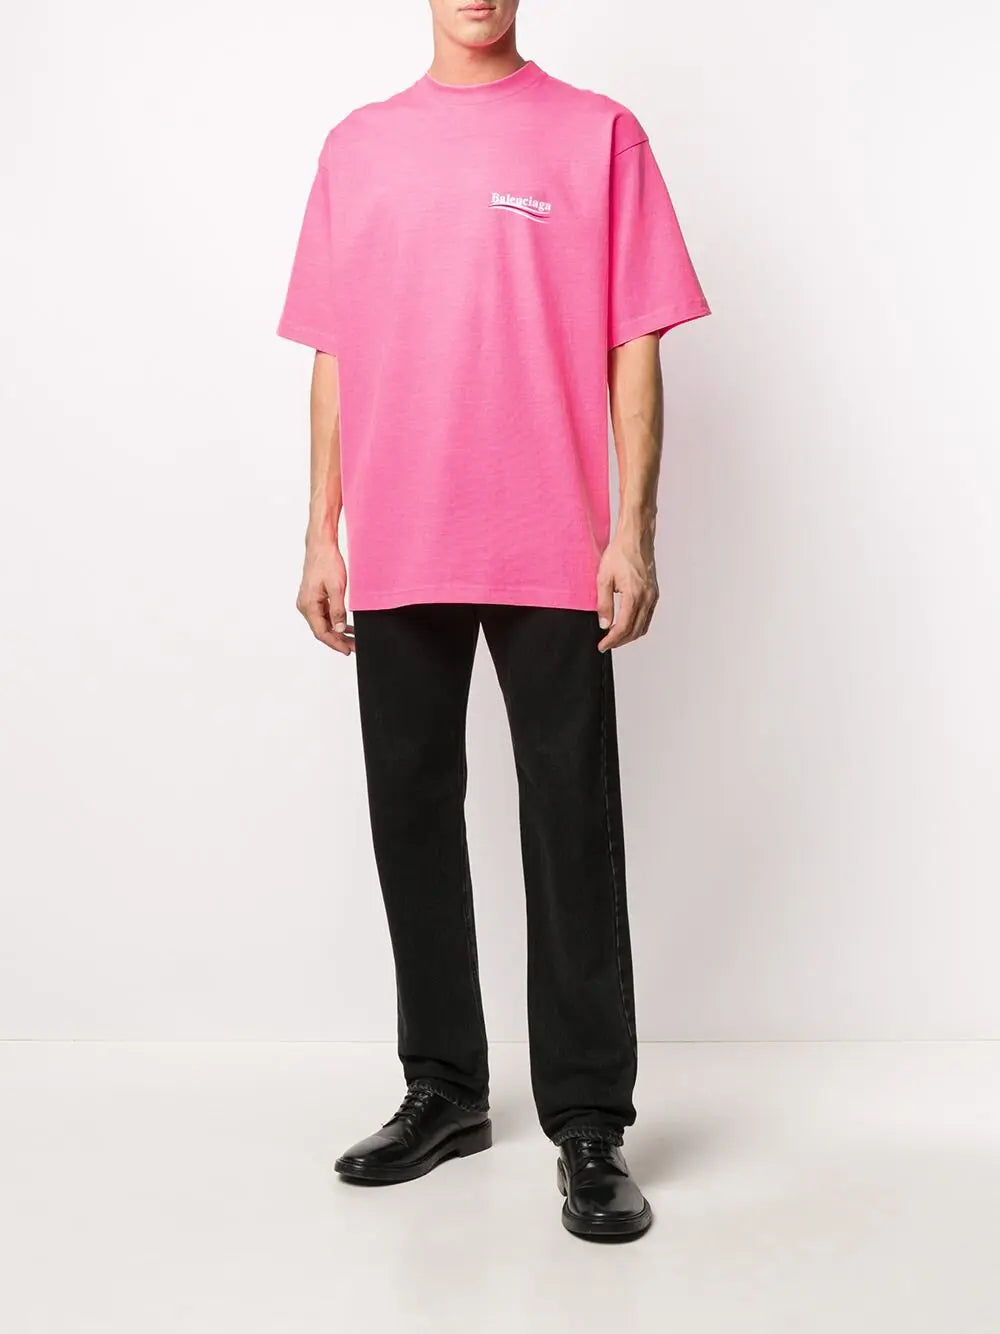 BALENCIAGA cotton tshirt with logo  Pink  Balenciaga tshirt 694576  TMVA9 online on GIGLIOCOM